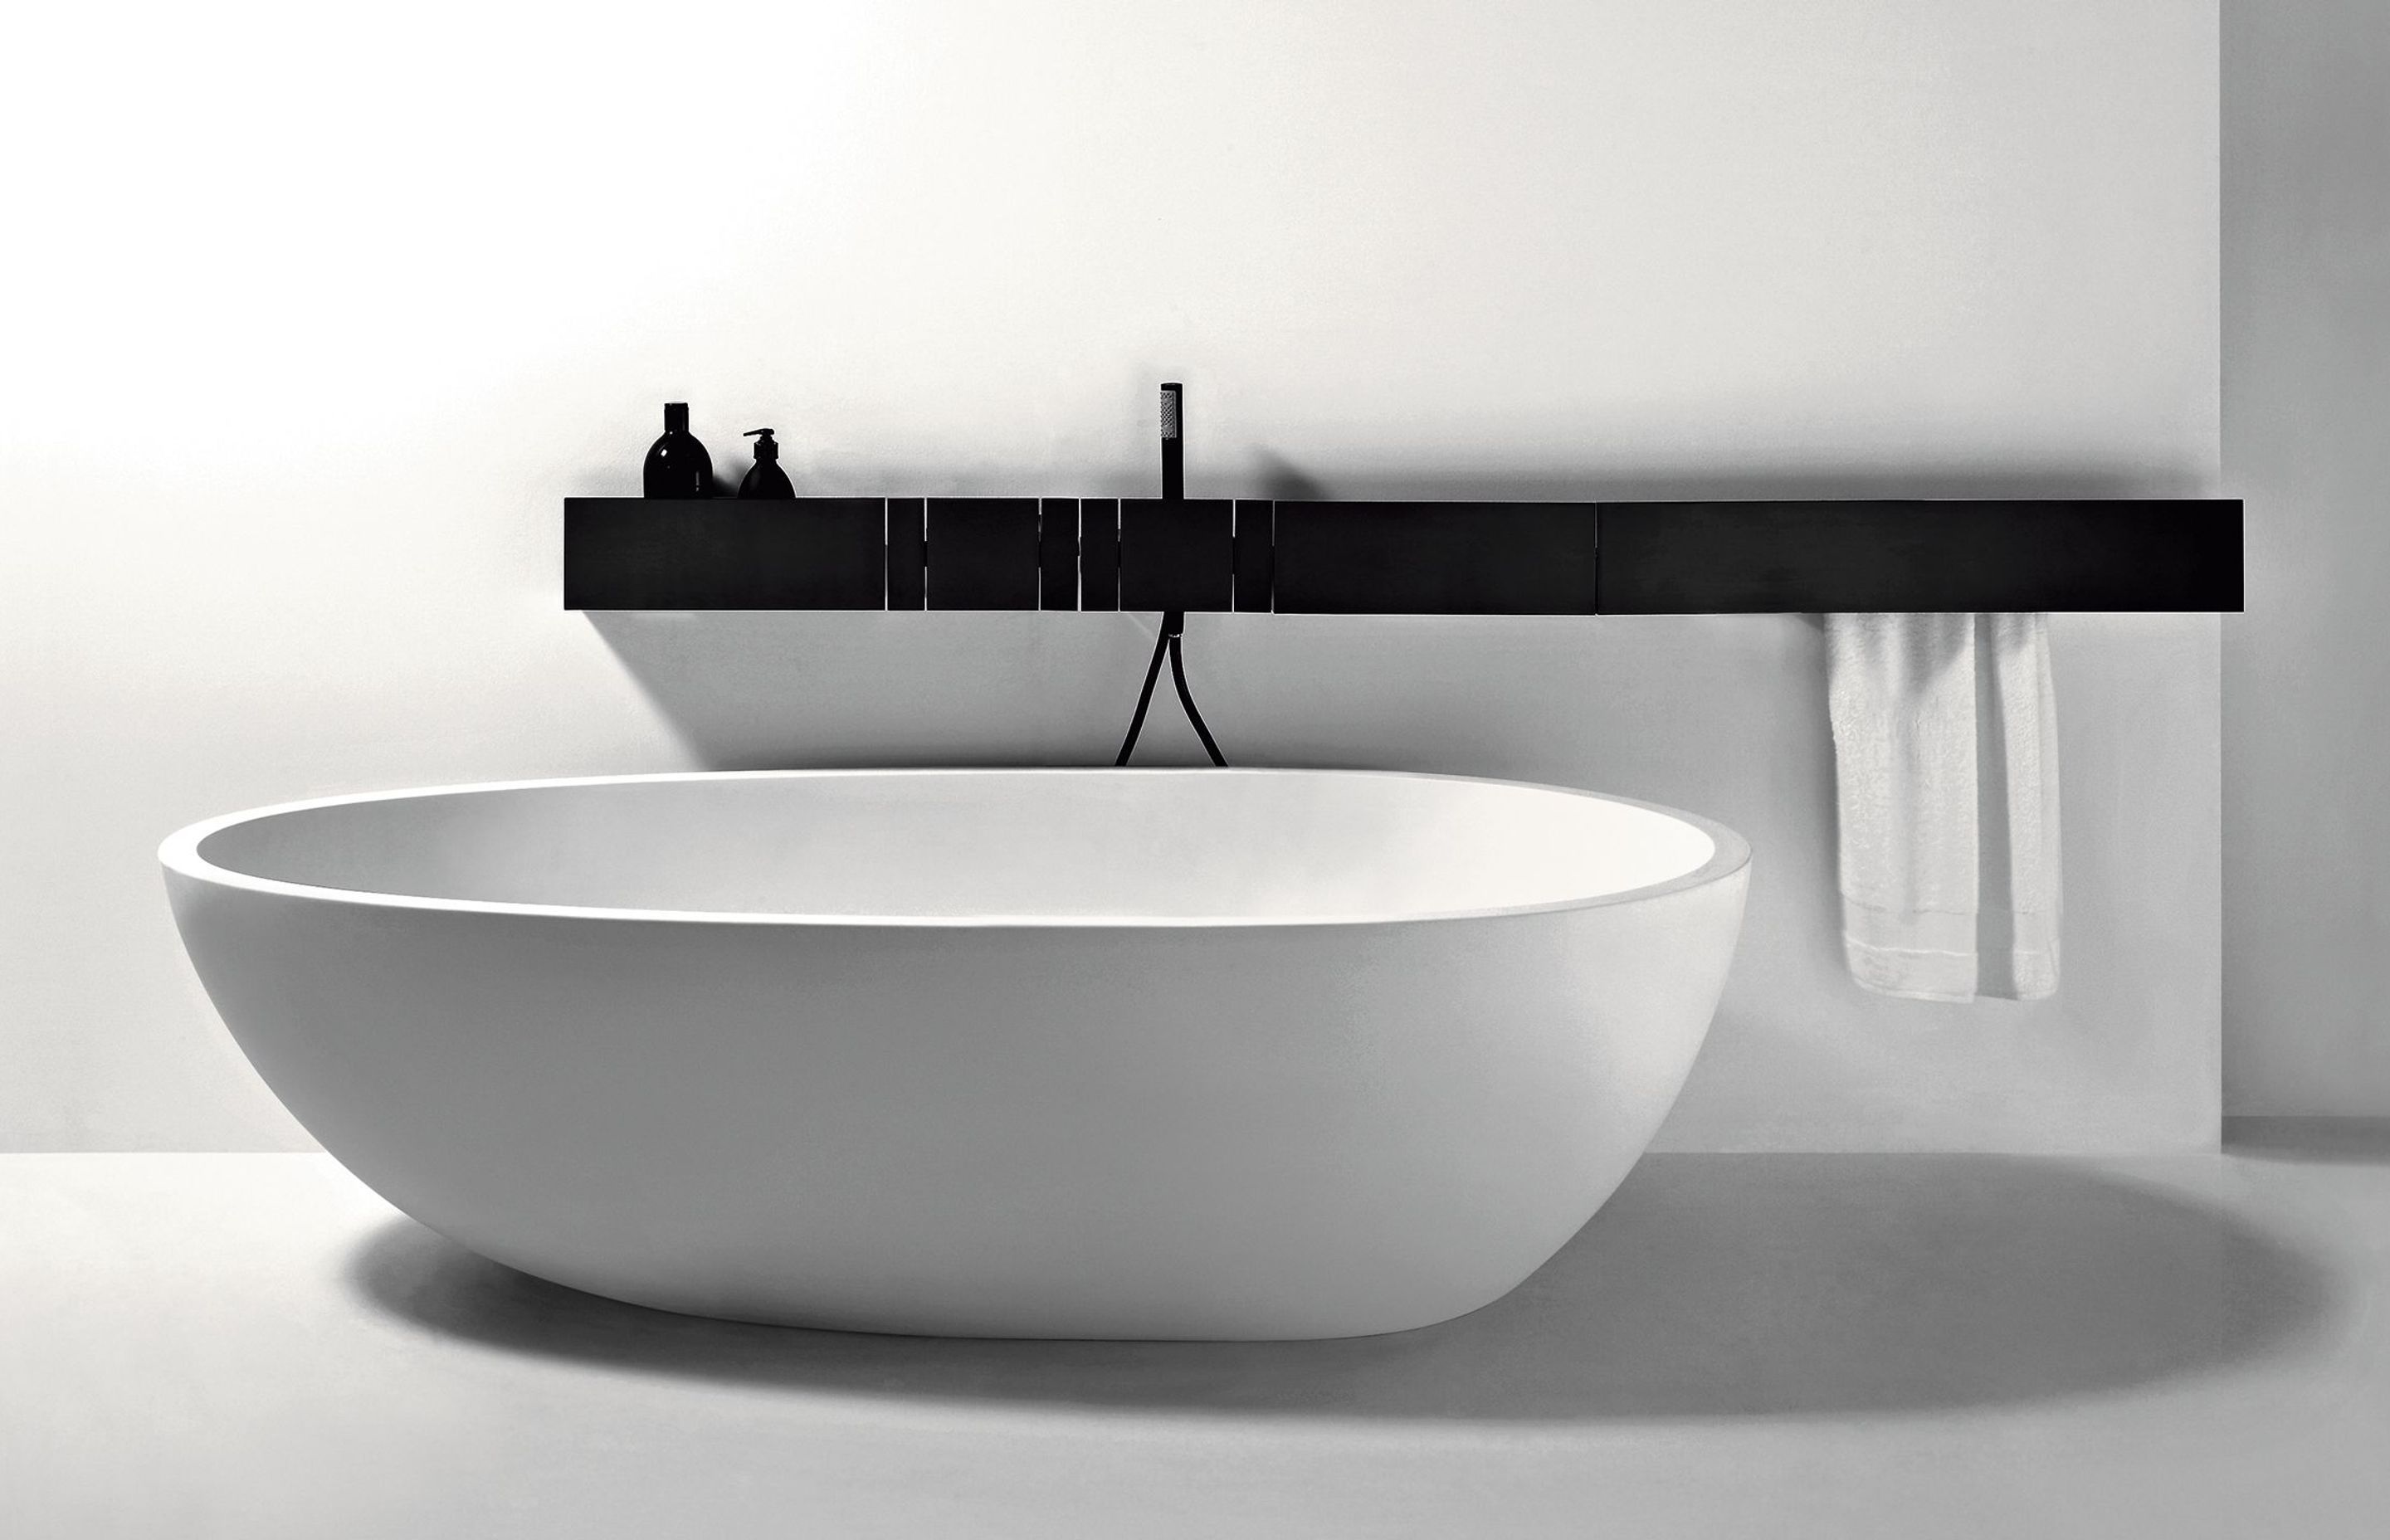 The sleek SEN bathroom range with Spoon XL bath, by Agape.